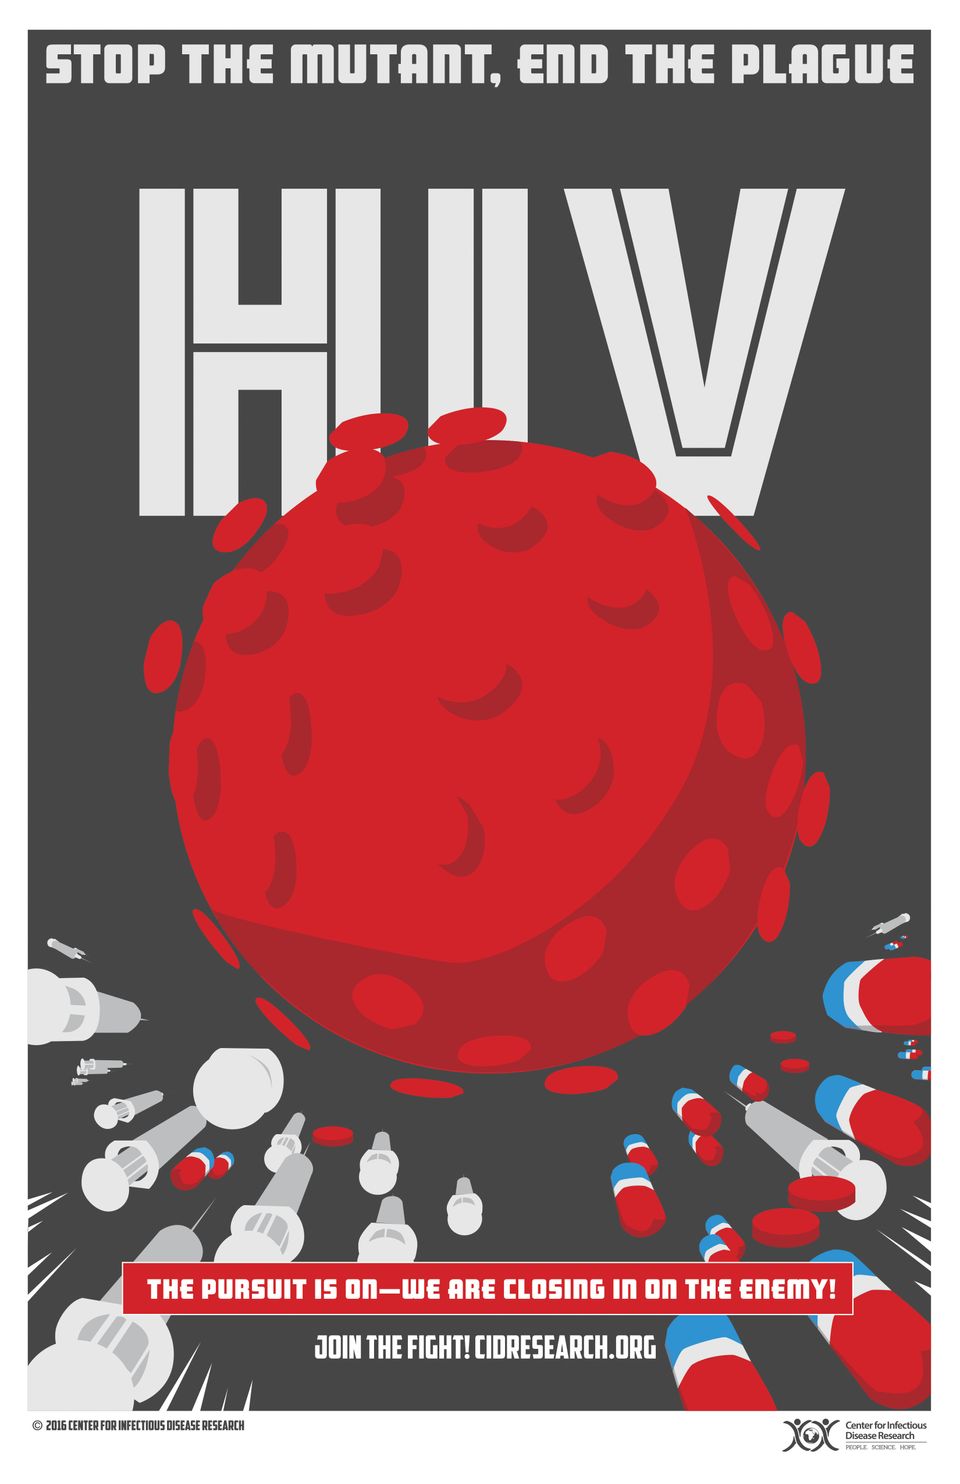 HIV/AIDS worldwide death toll: 1.1 million in 2015